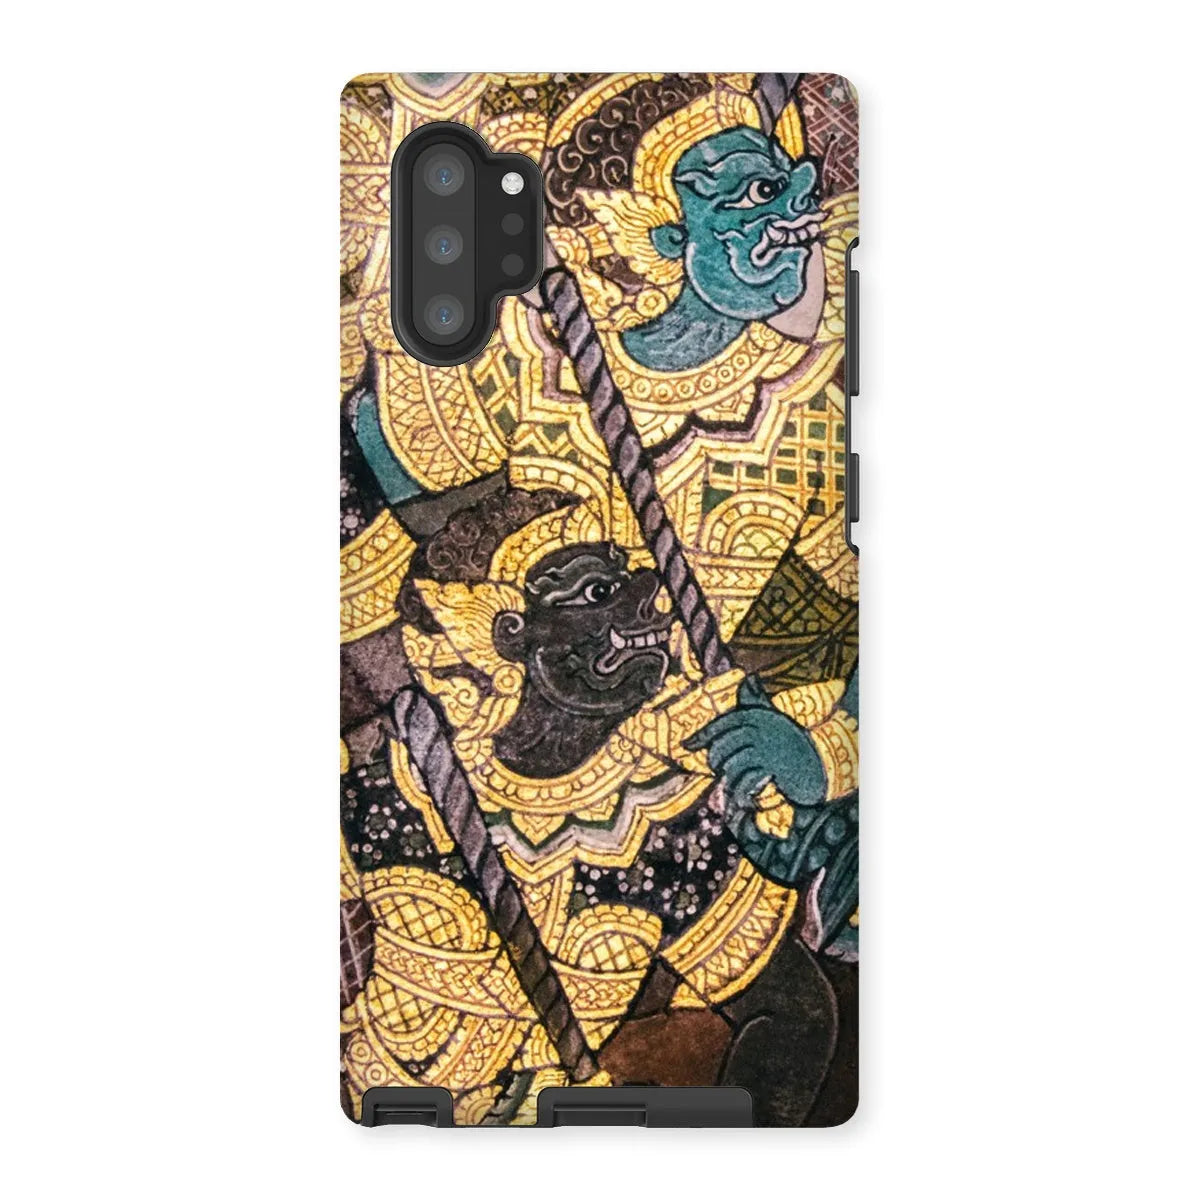 Action Men - Ancient Thai Temple Art Phone Case - Samsung Galaxy Note 10p / Matte - Mobile Phone Cases - Aesthetic Art